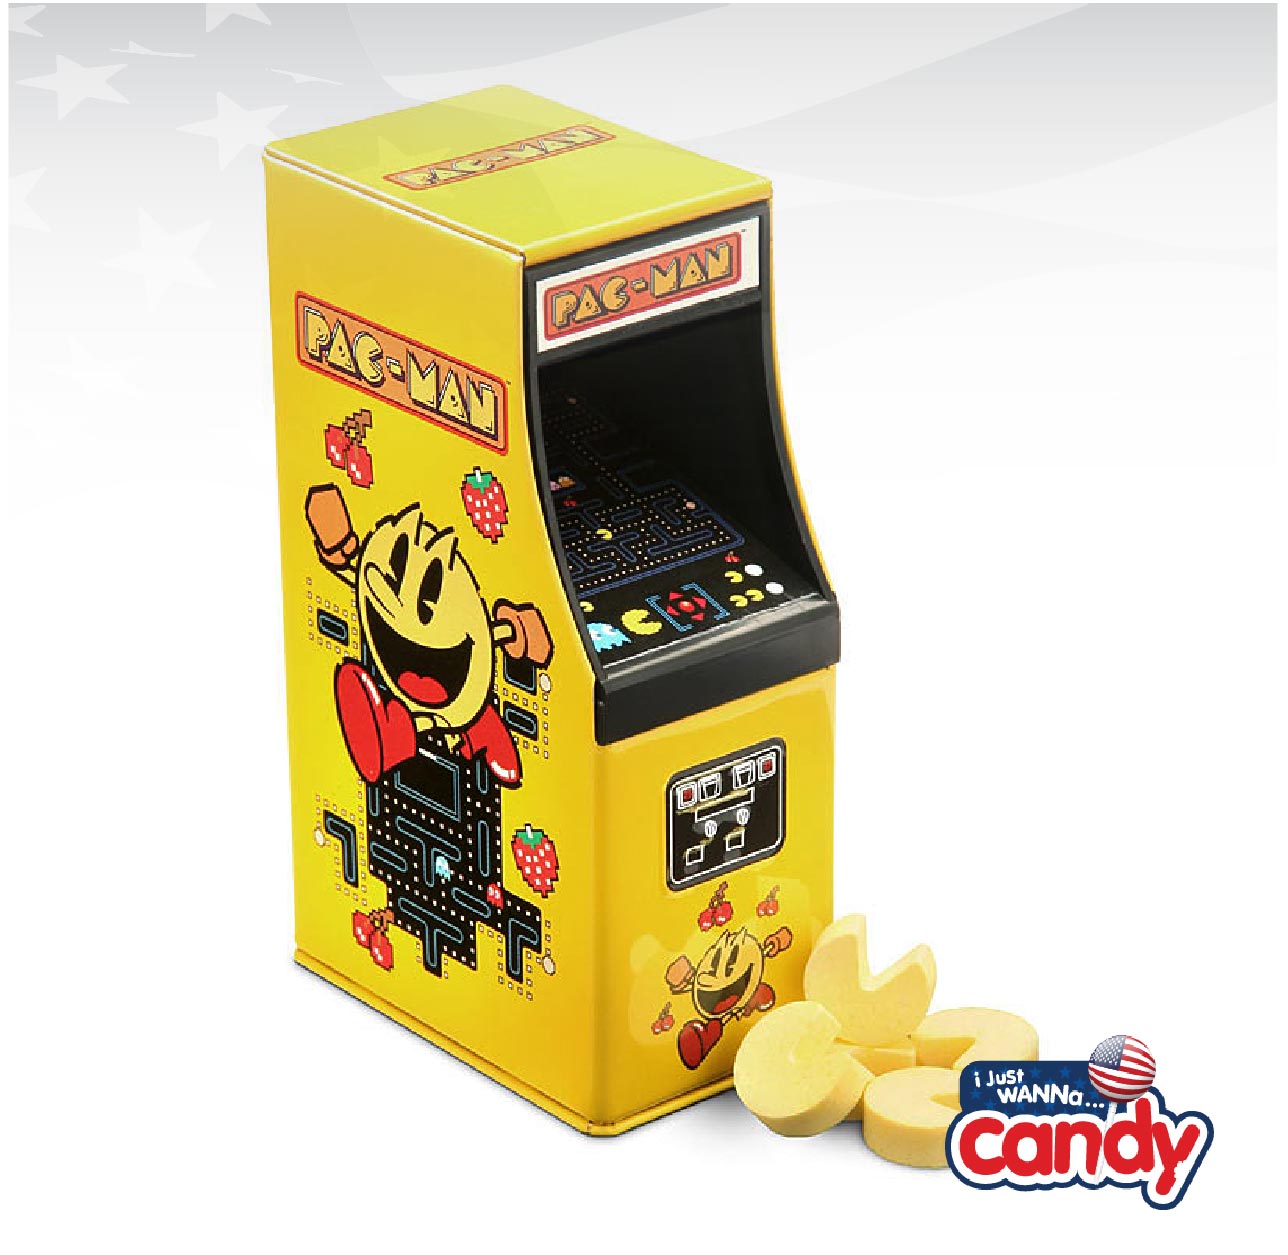 Boston America PacMan Arcade Candy 0.6oz (17g) - IJustWannaCandy